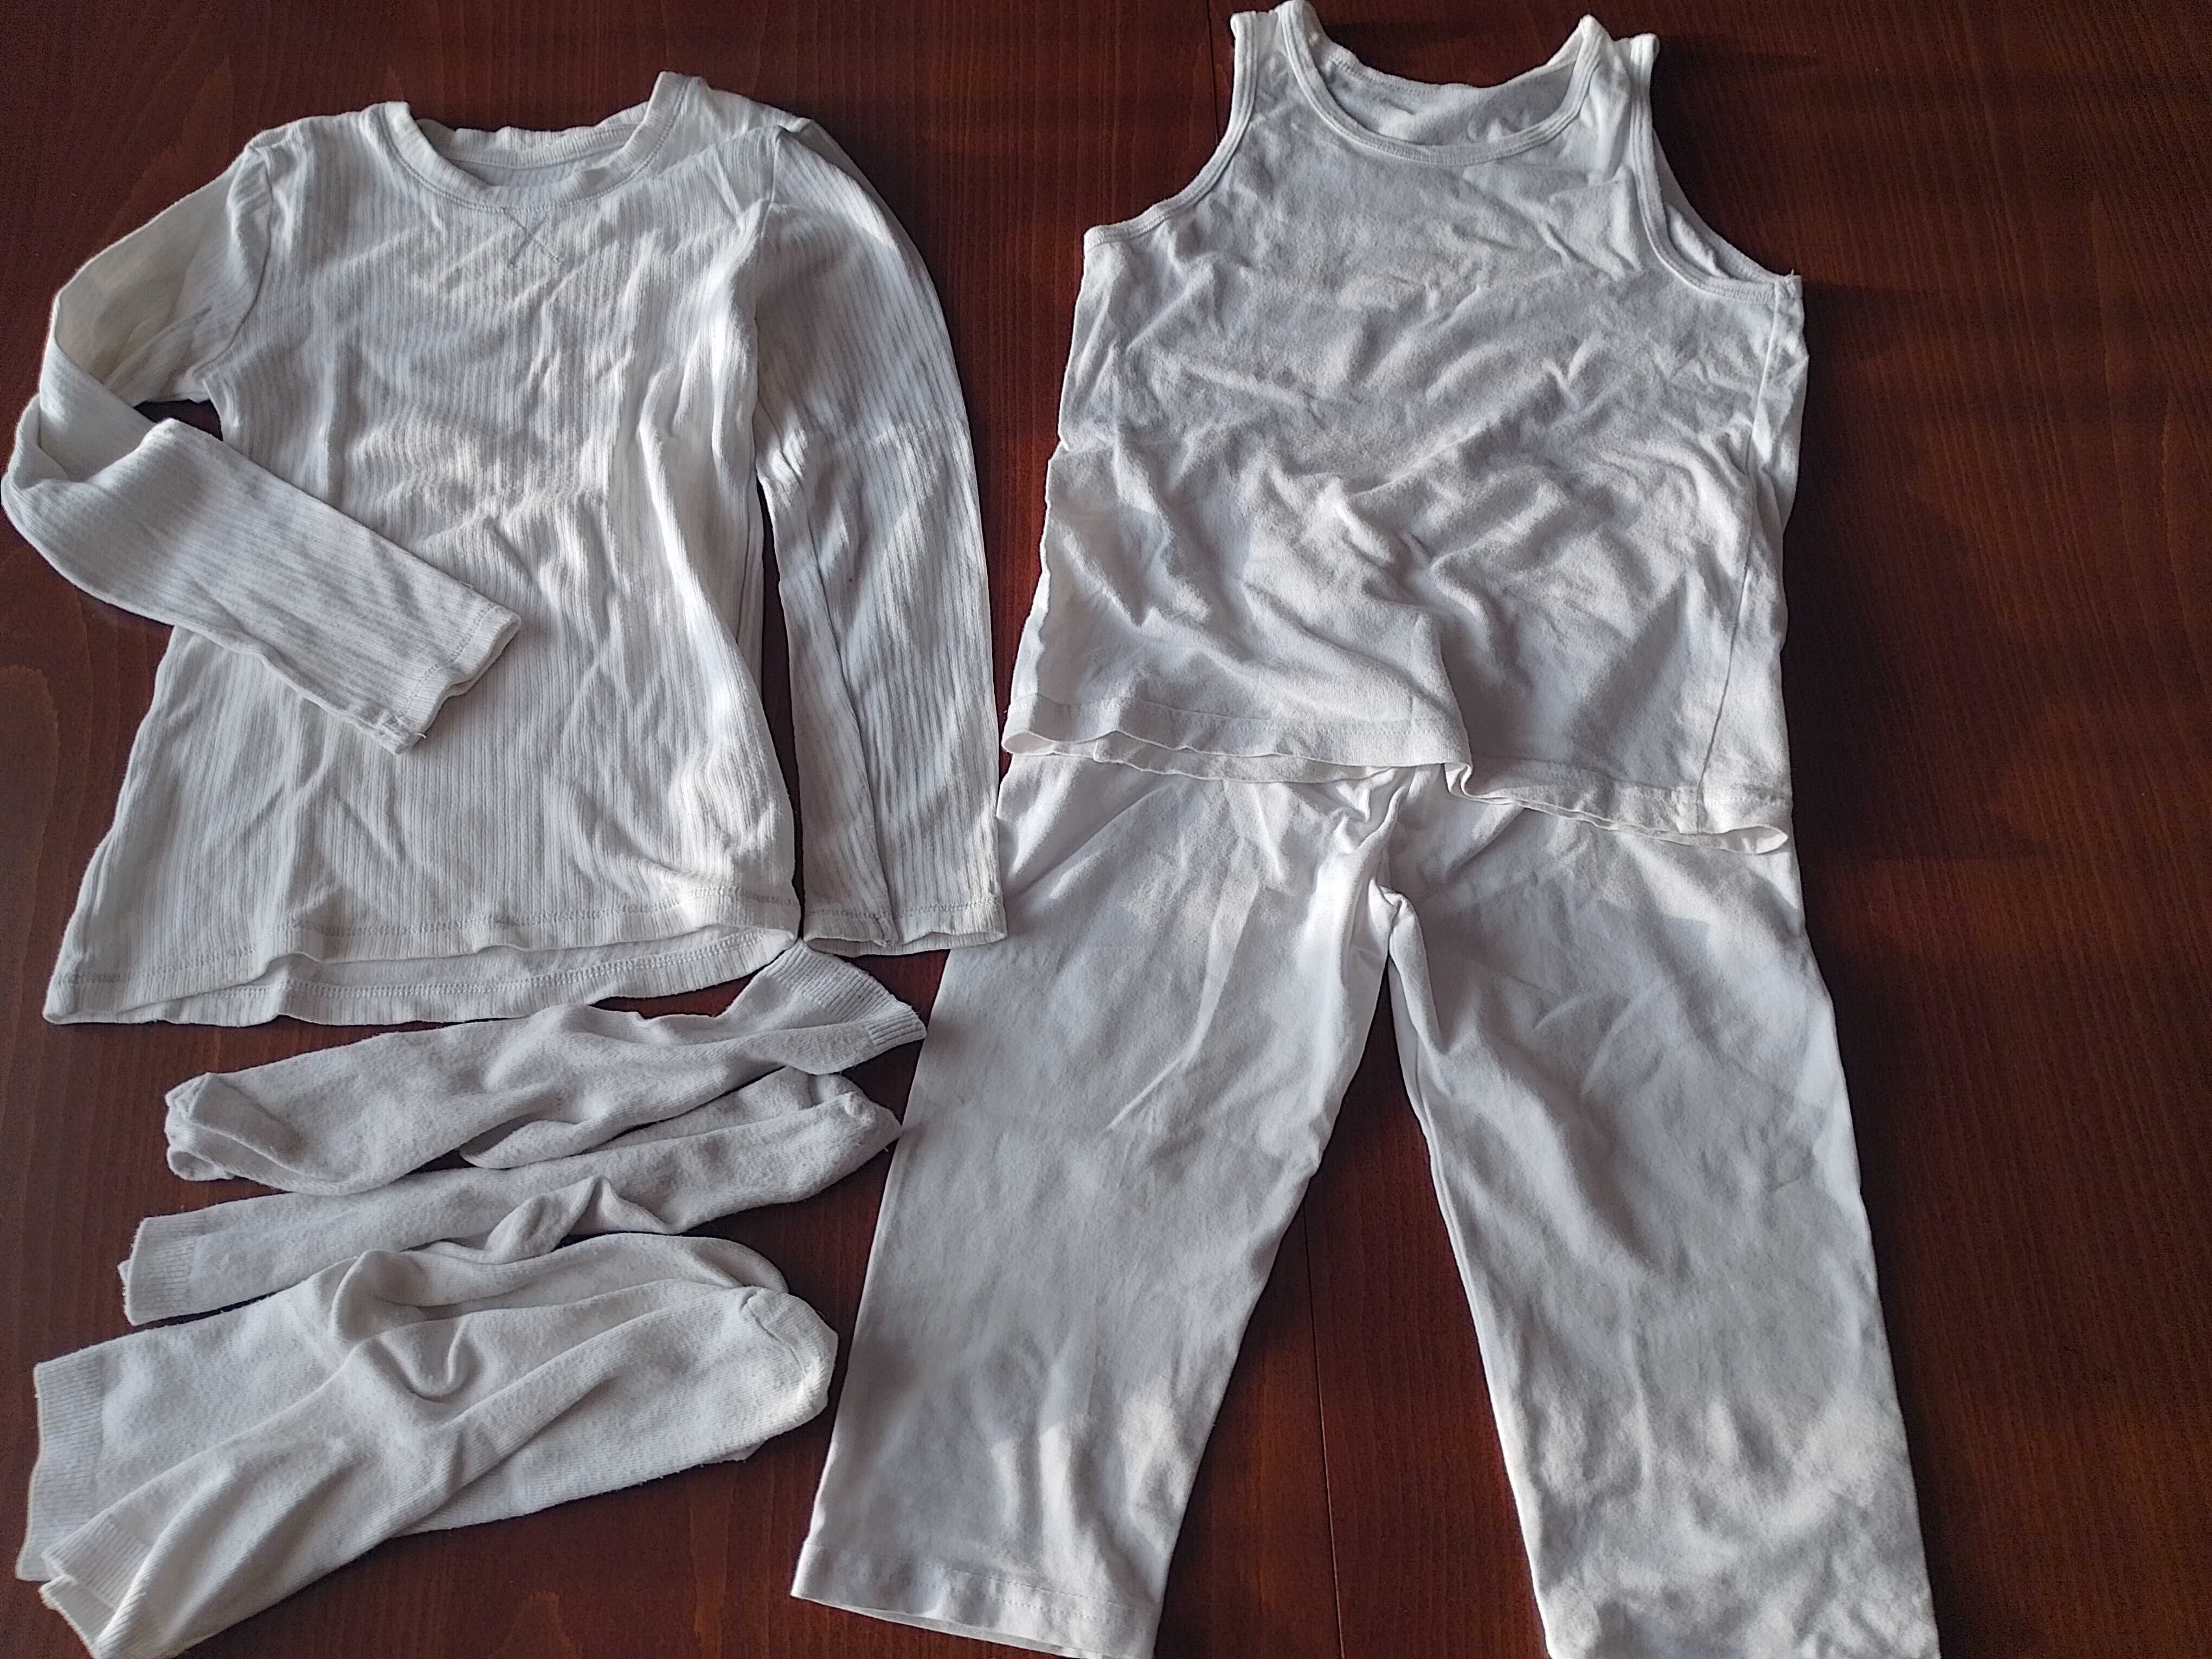 Komunijny strój chłopiec 136-140, buty 30, 32, koszulki, polar, skarpe